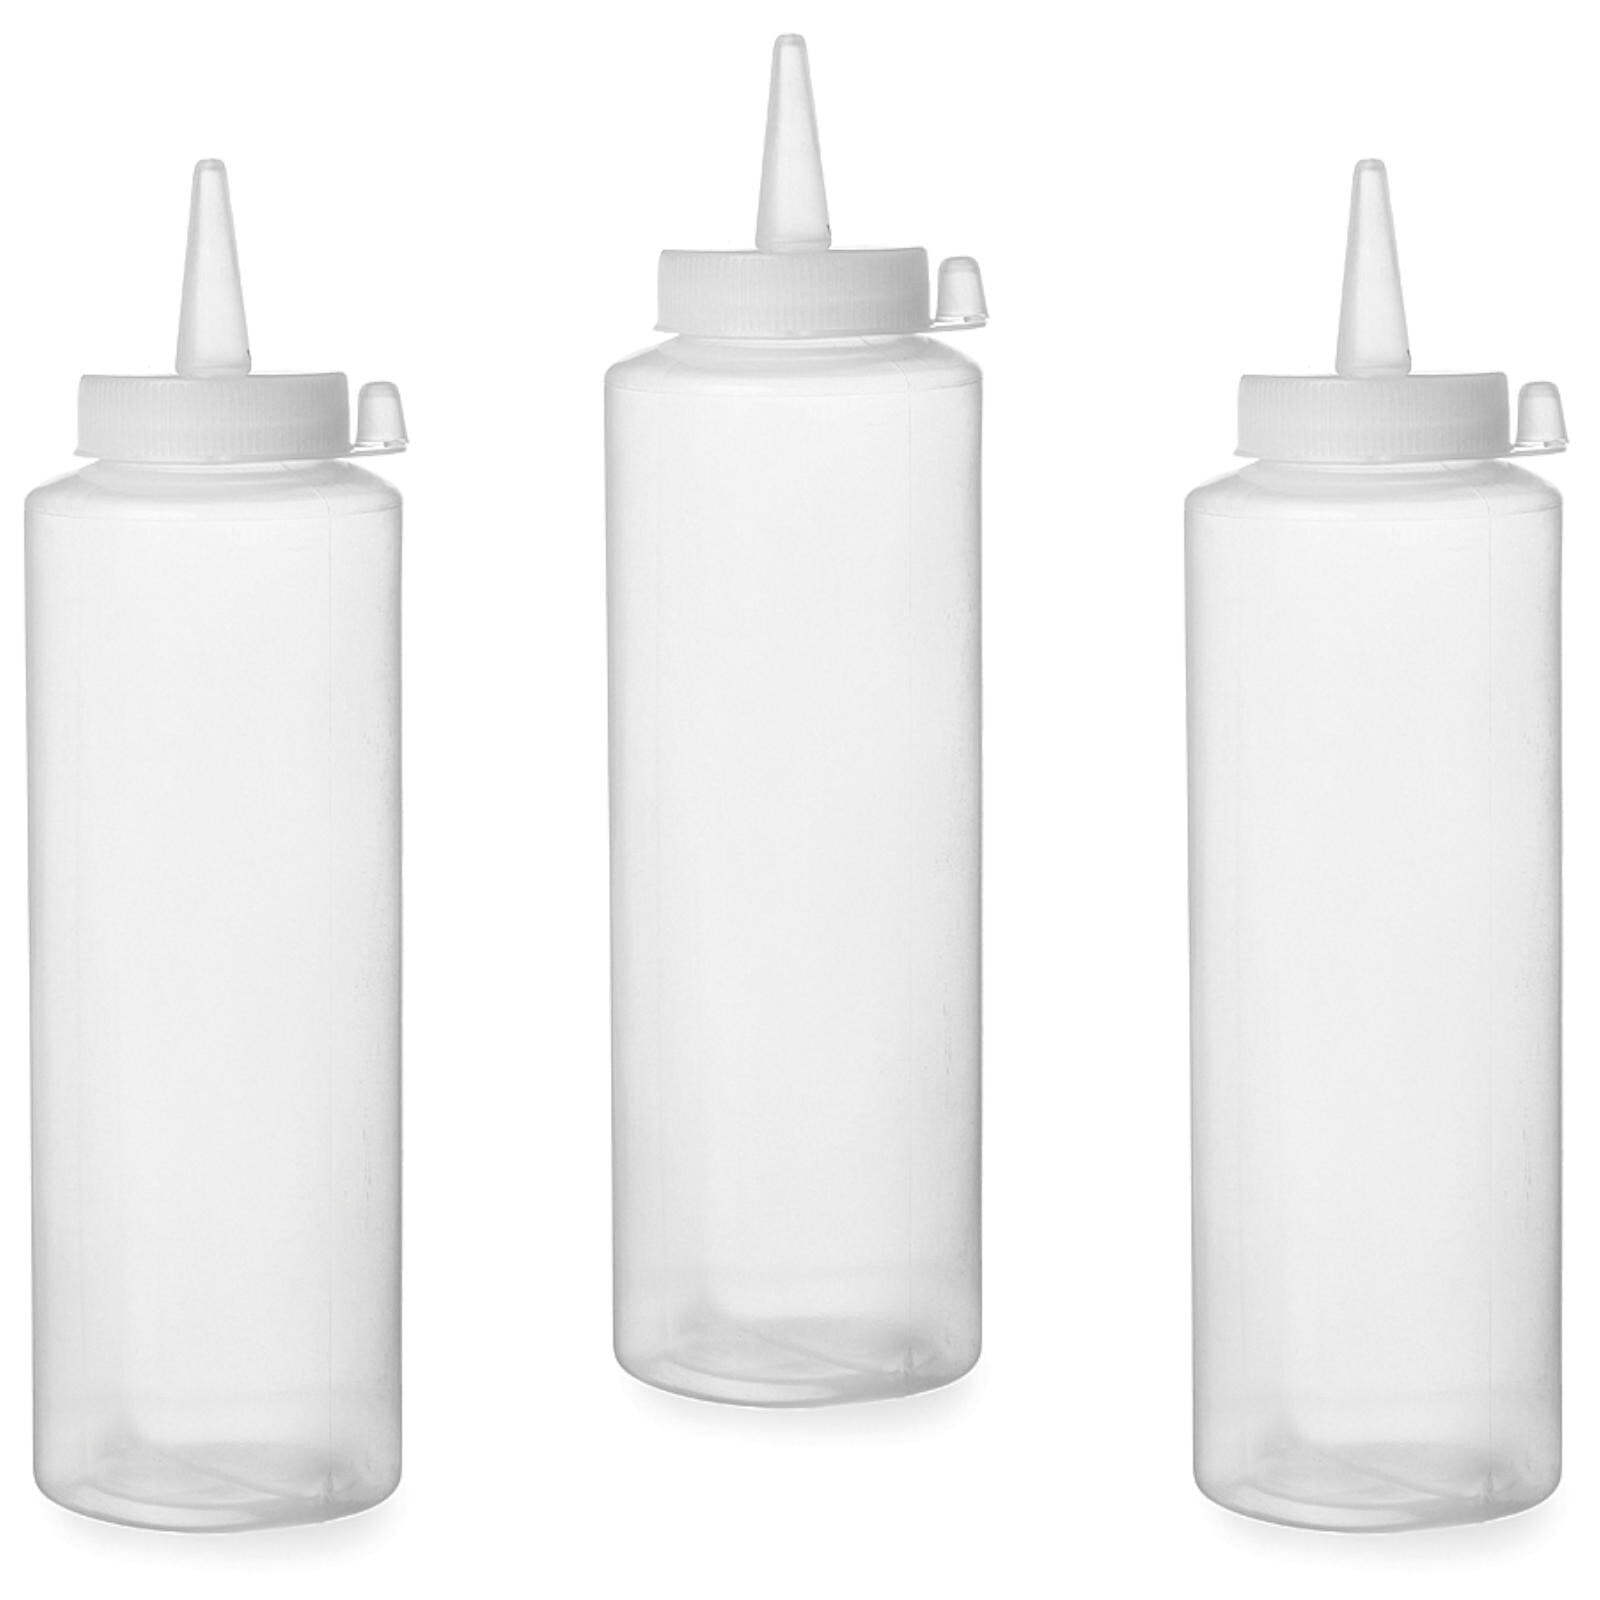 Cold sauce dispenser, set of 3 - transparent 0.2L - HENDI 558058